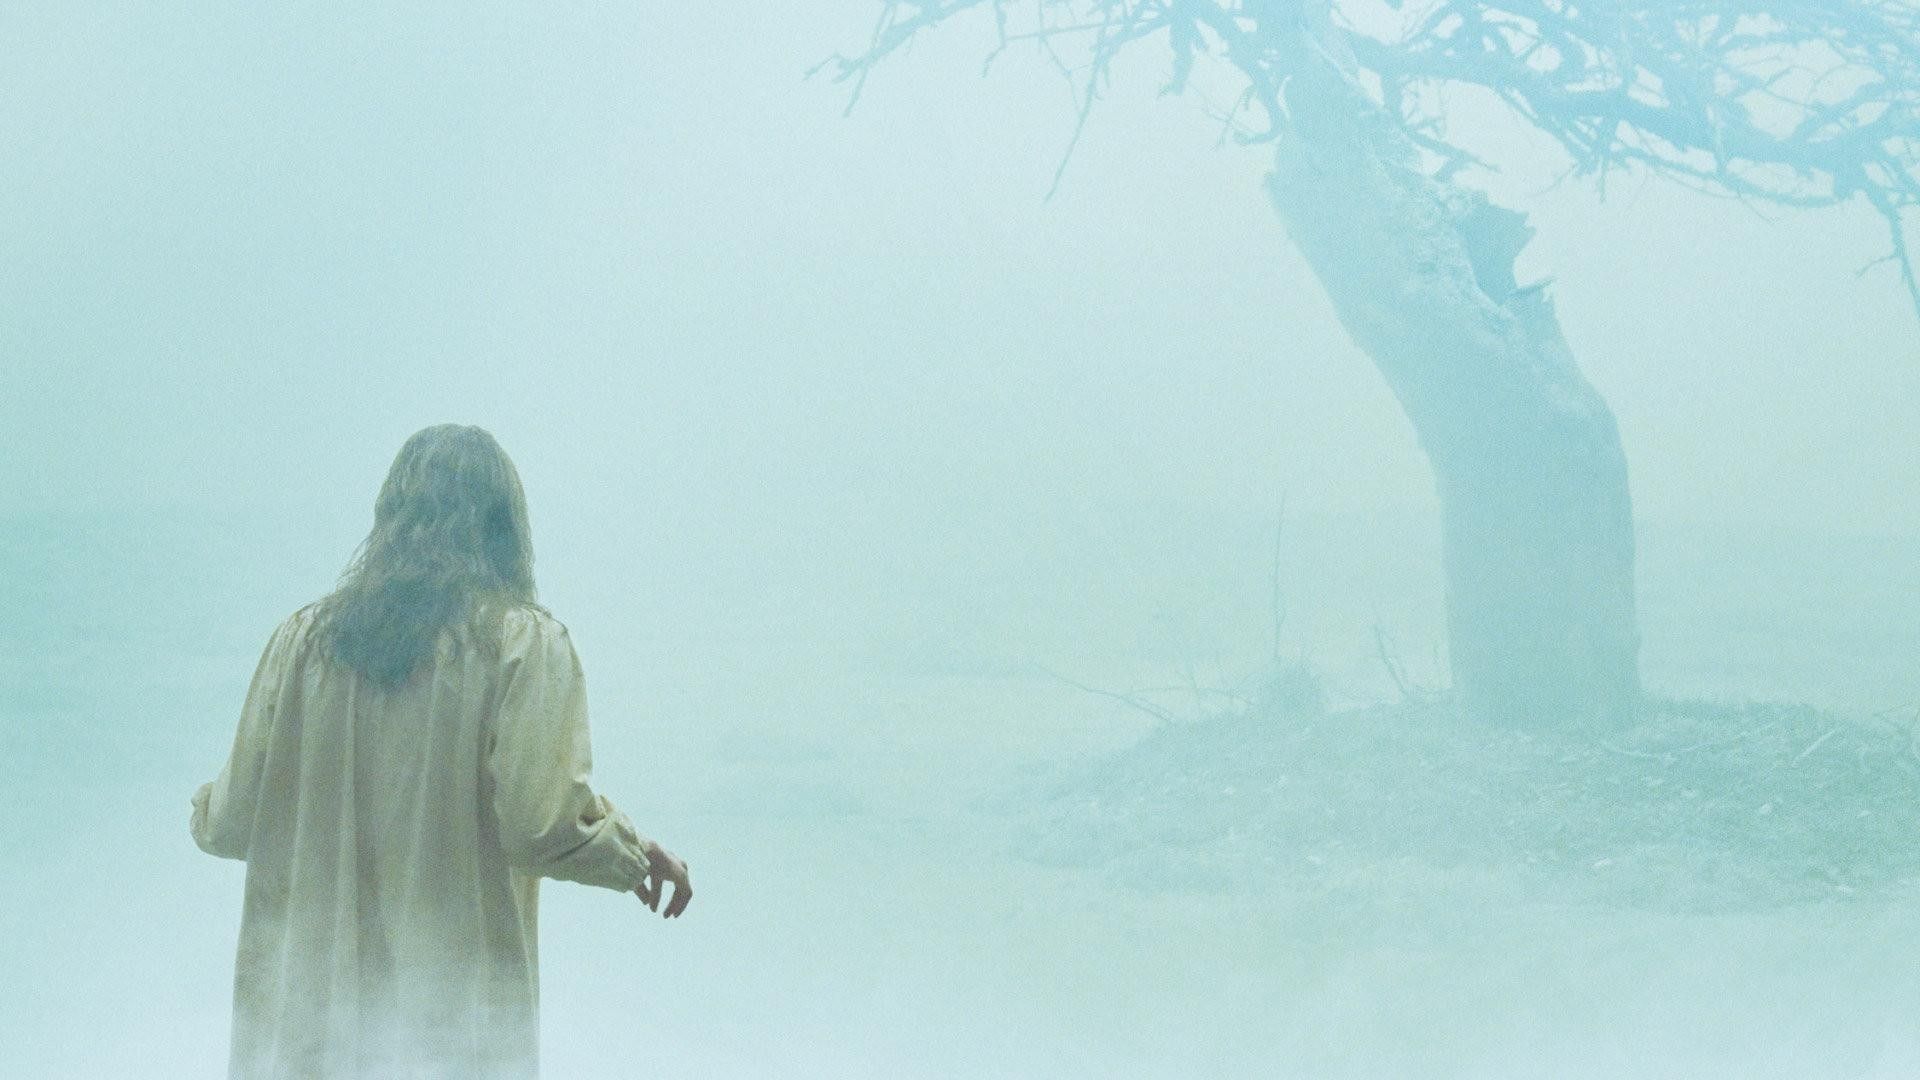 Promotional art for the 2005 supernatural horror film The Exorcism of Emily Rose.